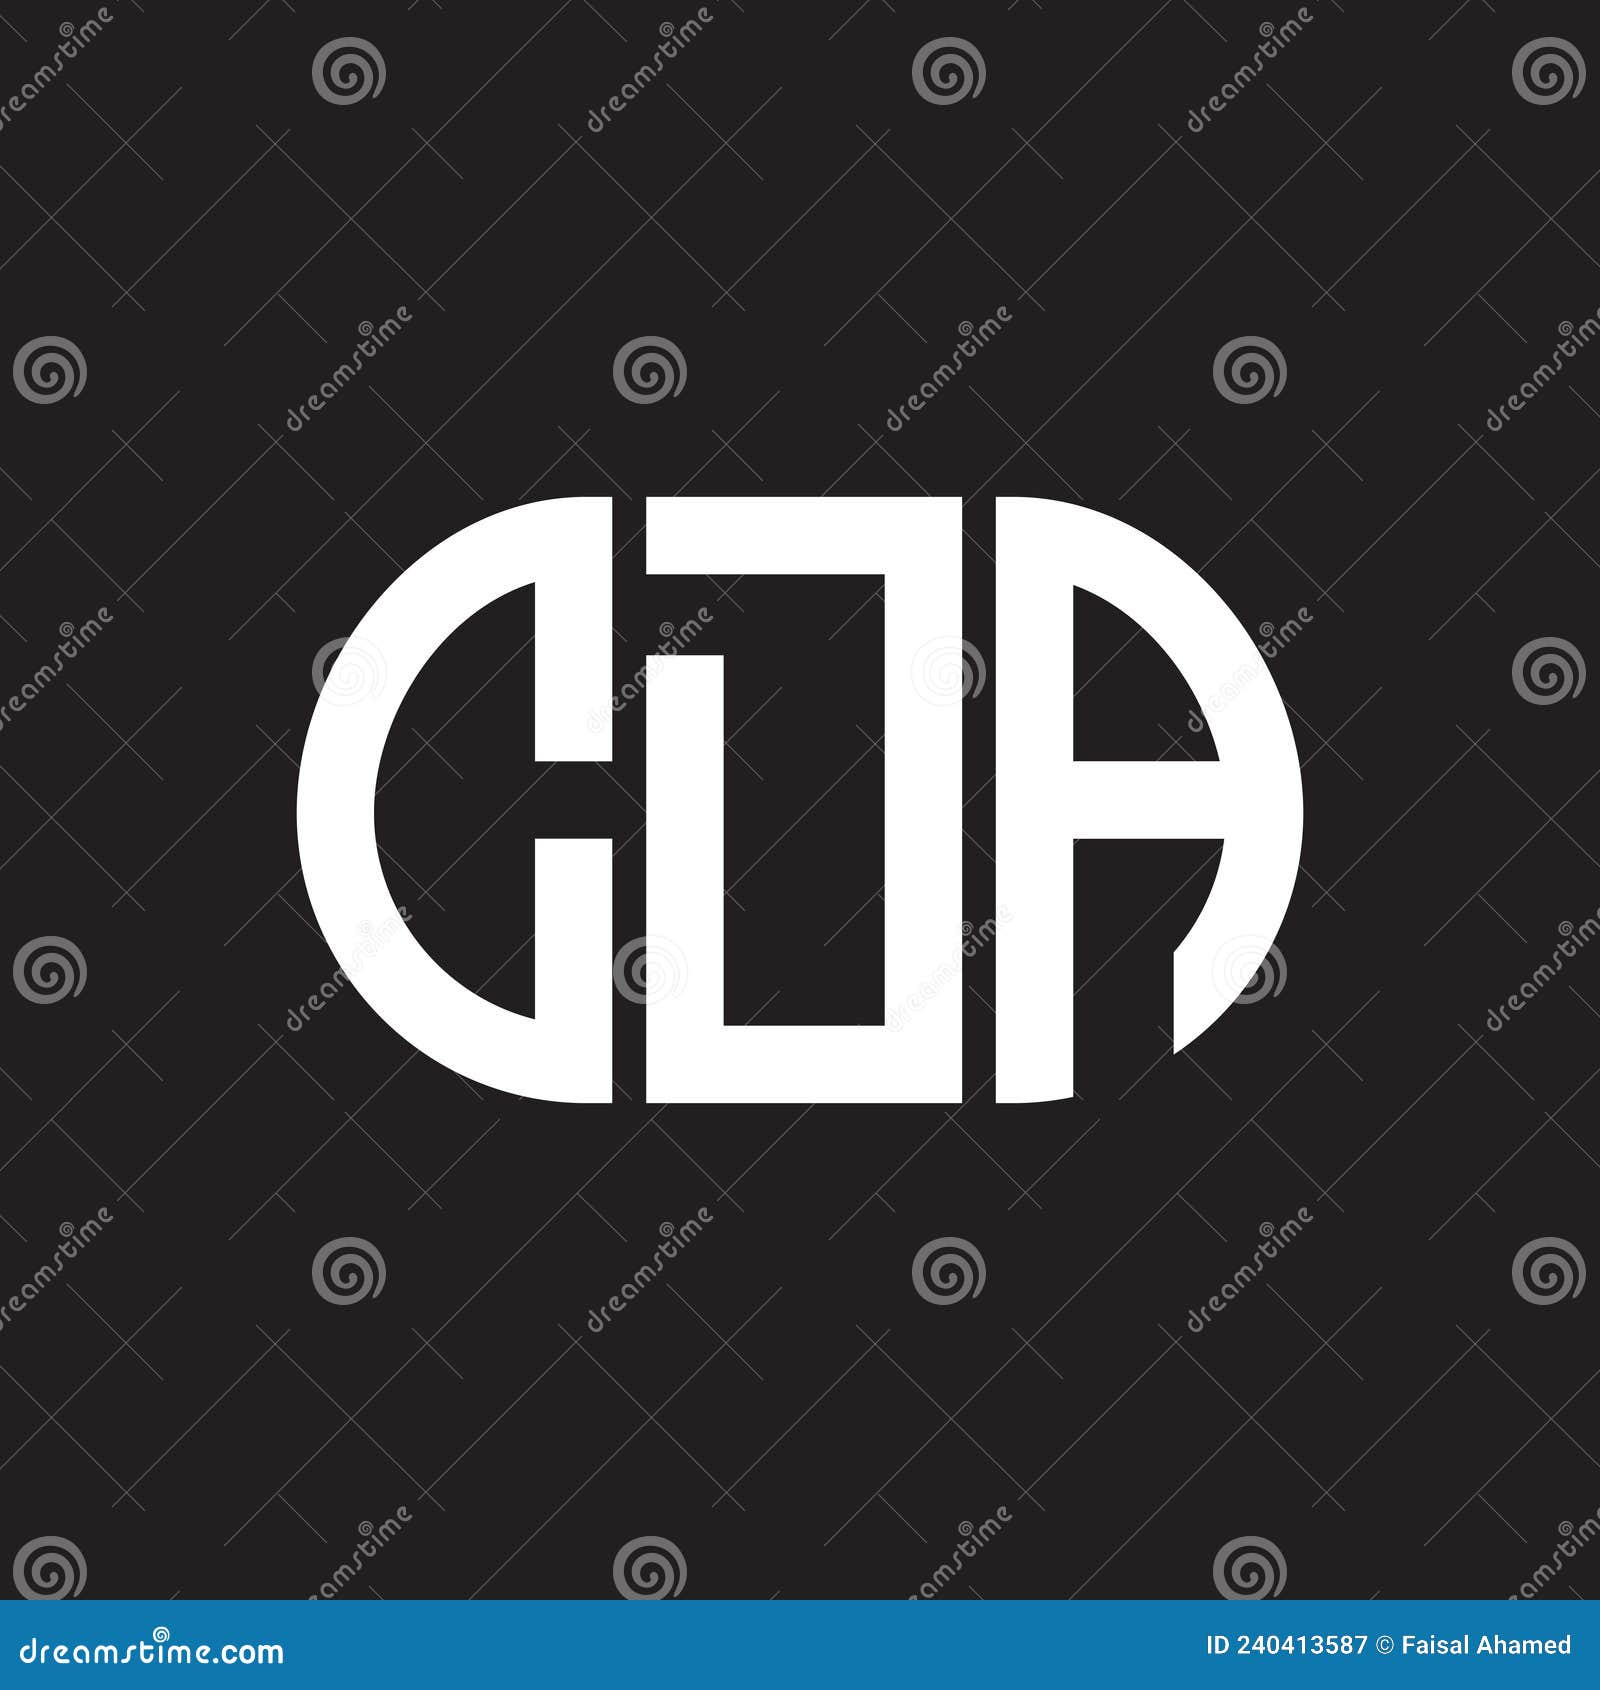 Cda Letter Logo Design On Black Background Cda Creative Initials